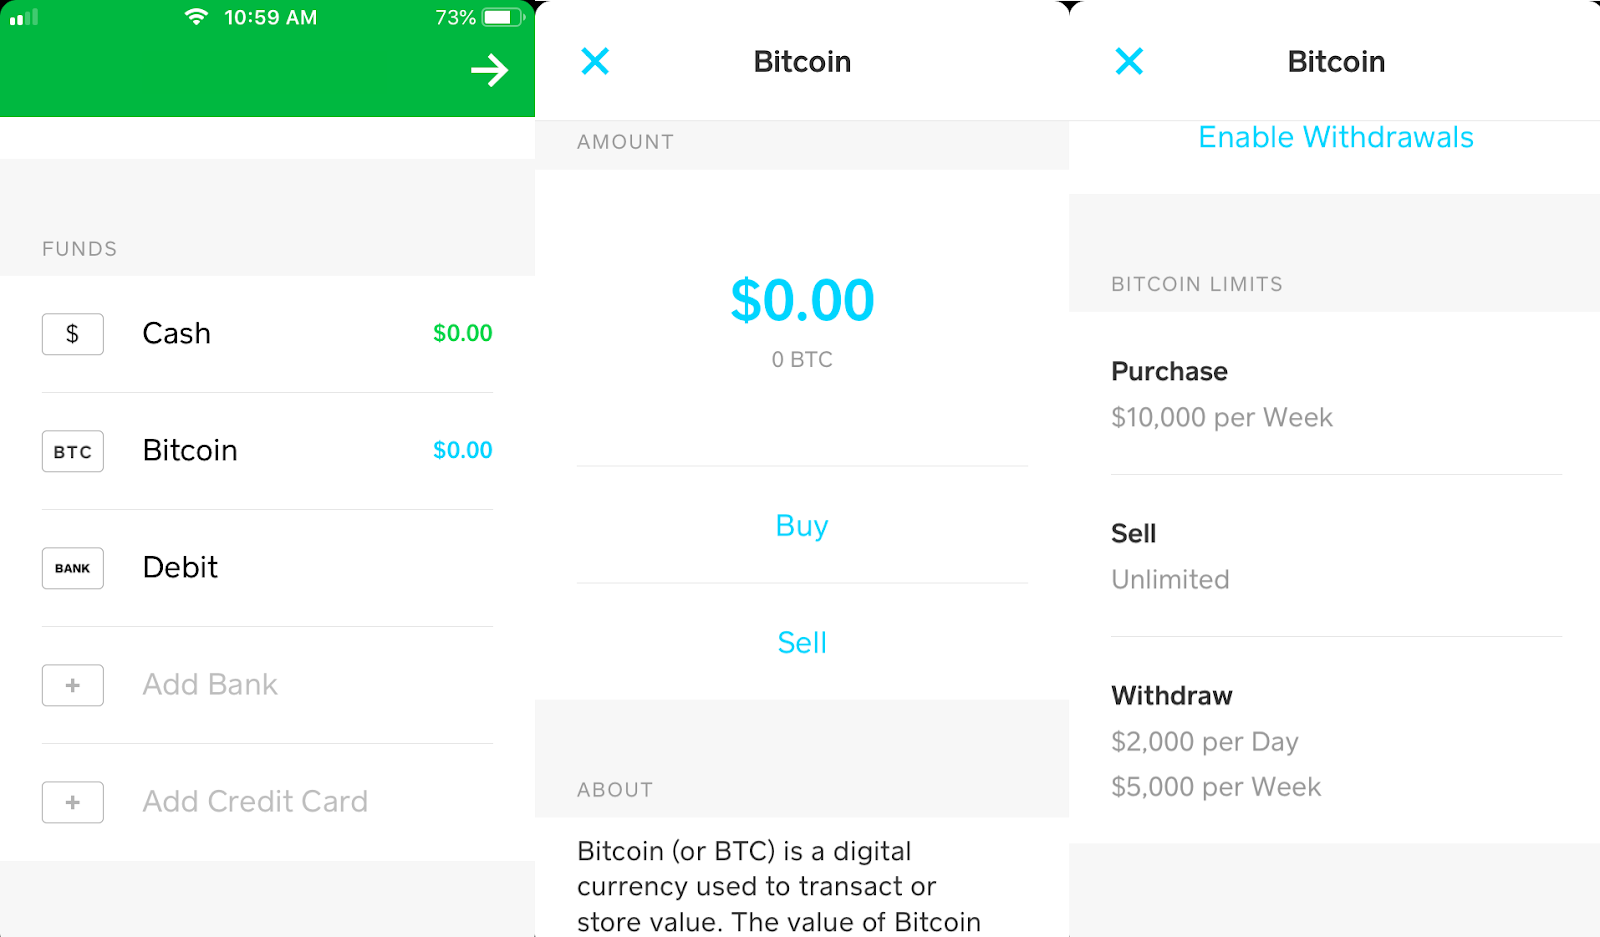 Screenshots of Venmo app showing balances in Cash and Bitcoin.